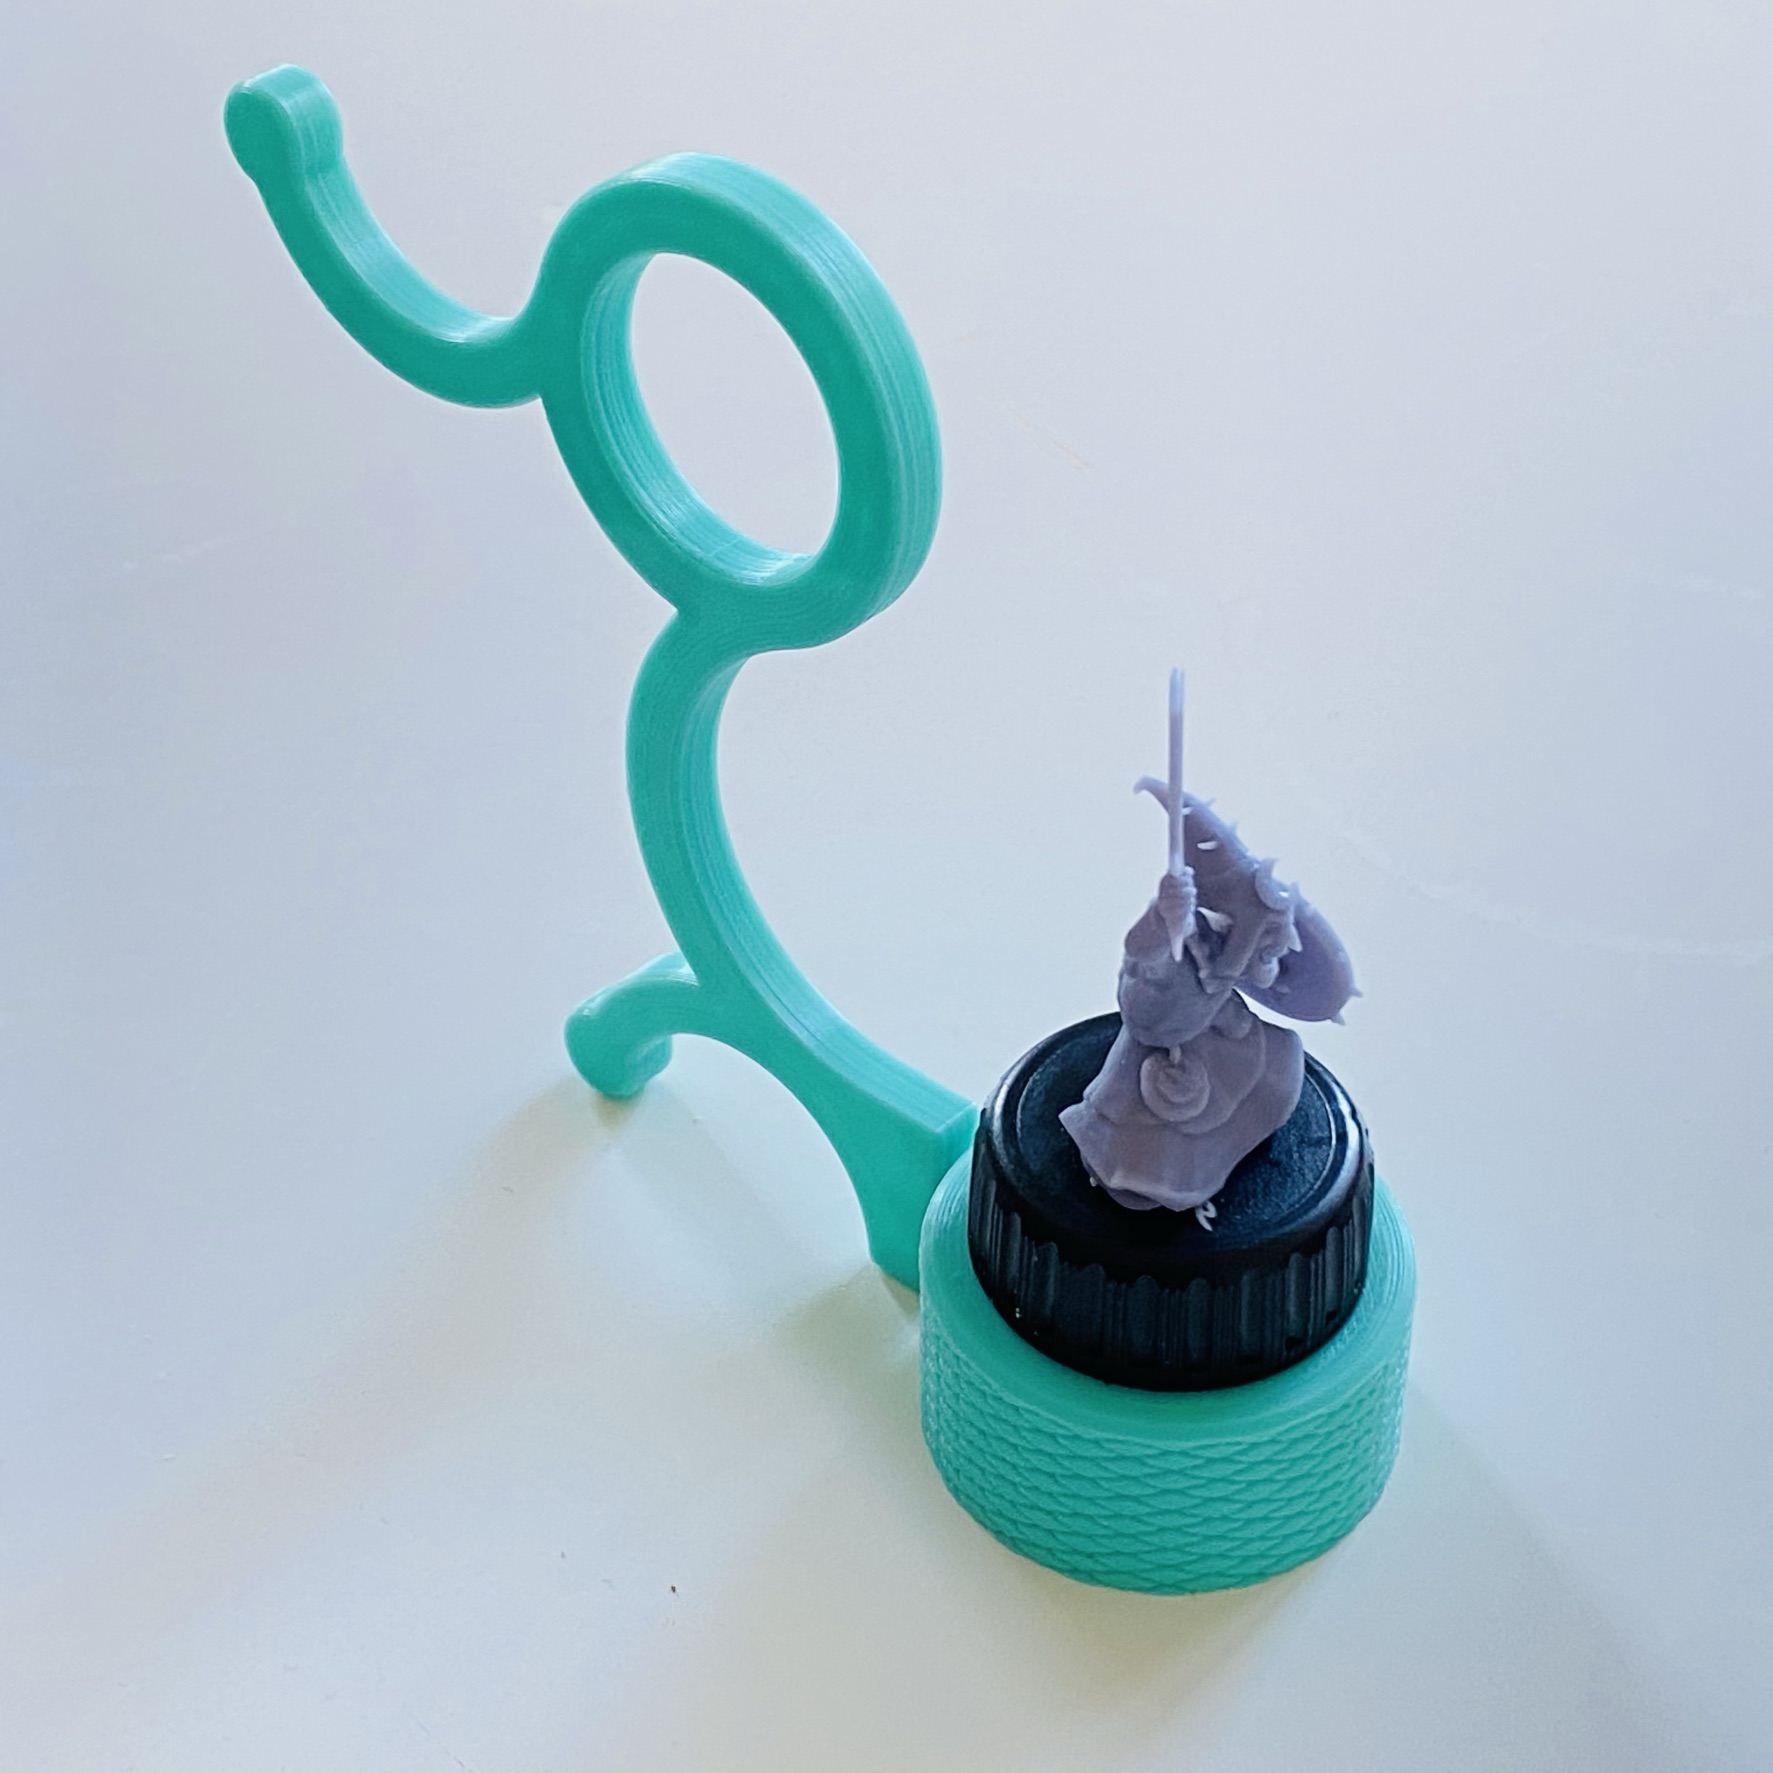 QSMPÖH Quick Swap Miniature Painting Ö Holder for standard soda bottle caps